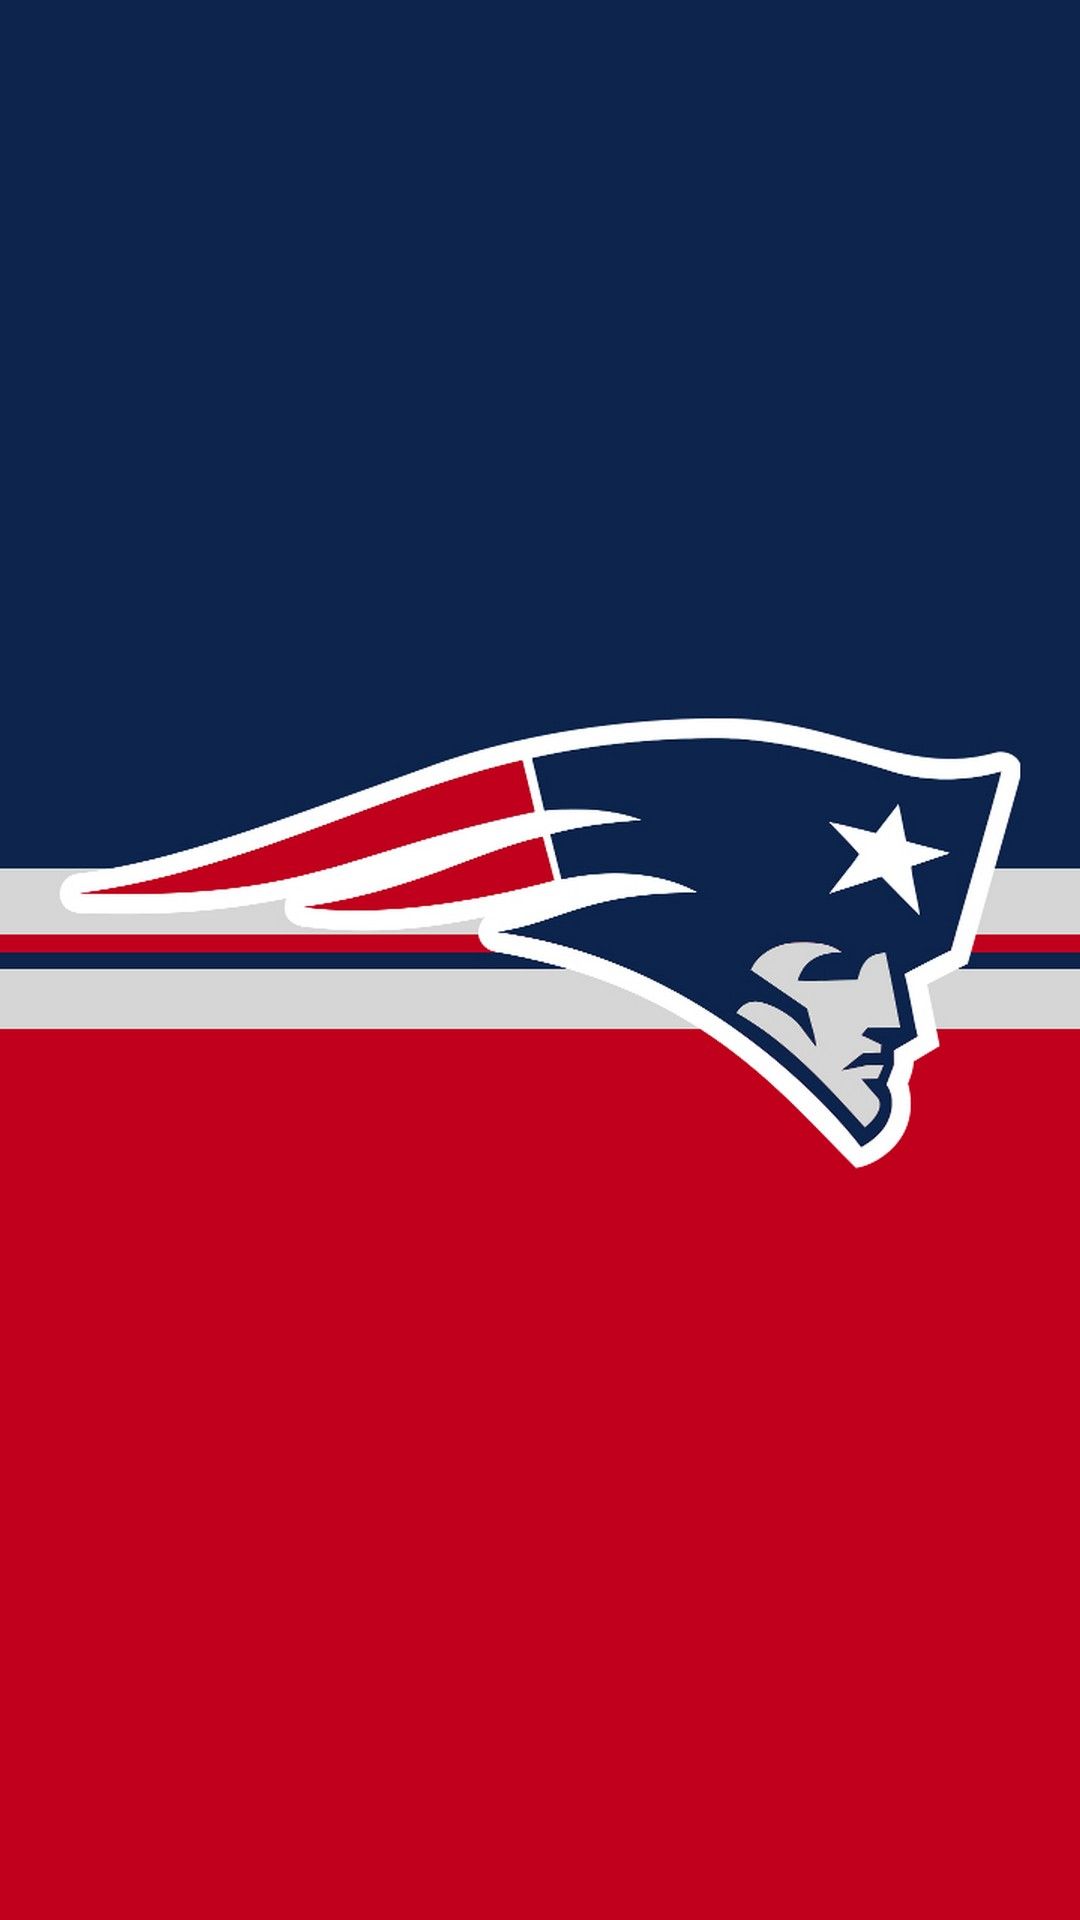 New England Patriots iPhone Wallpaper Lock Screen. Best NFL Wallpaper. New england patriots wallpaper, New england patriots logo, New england patriots